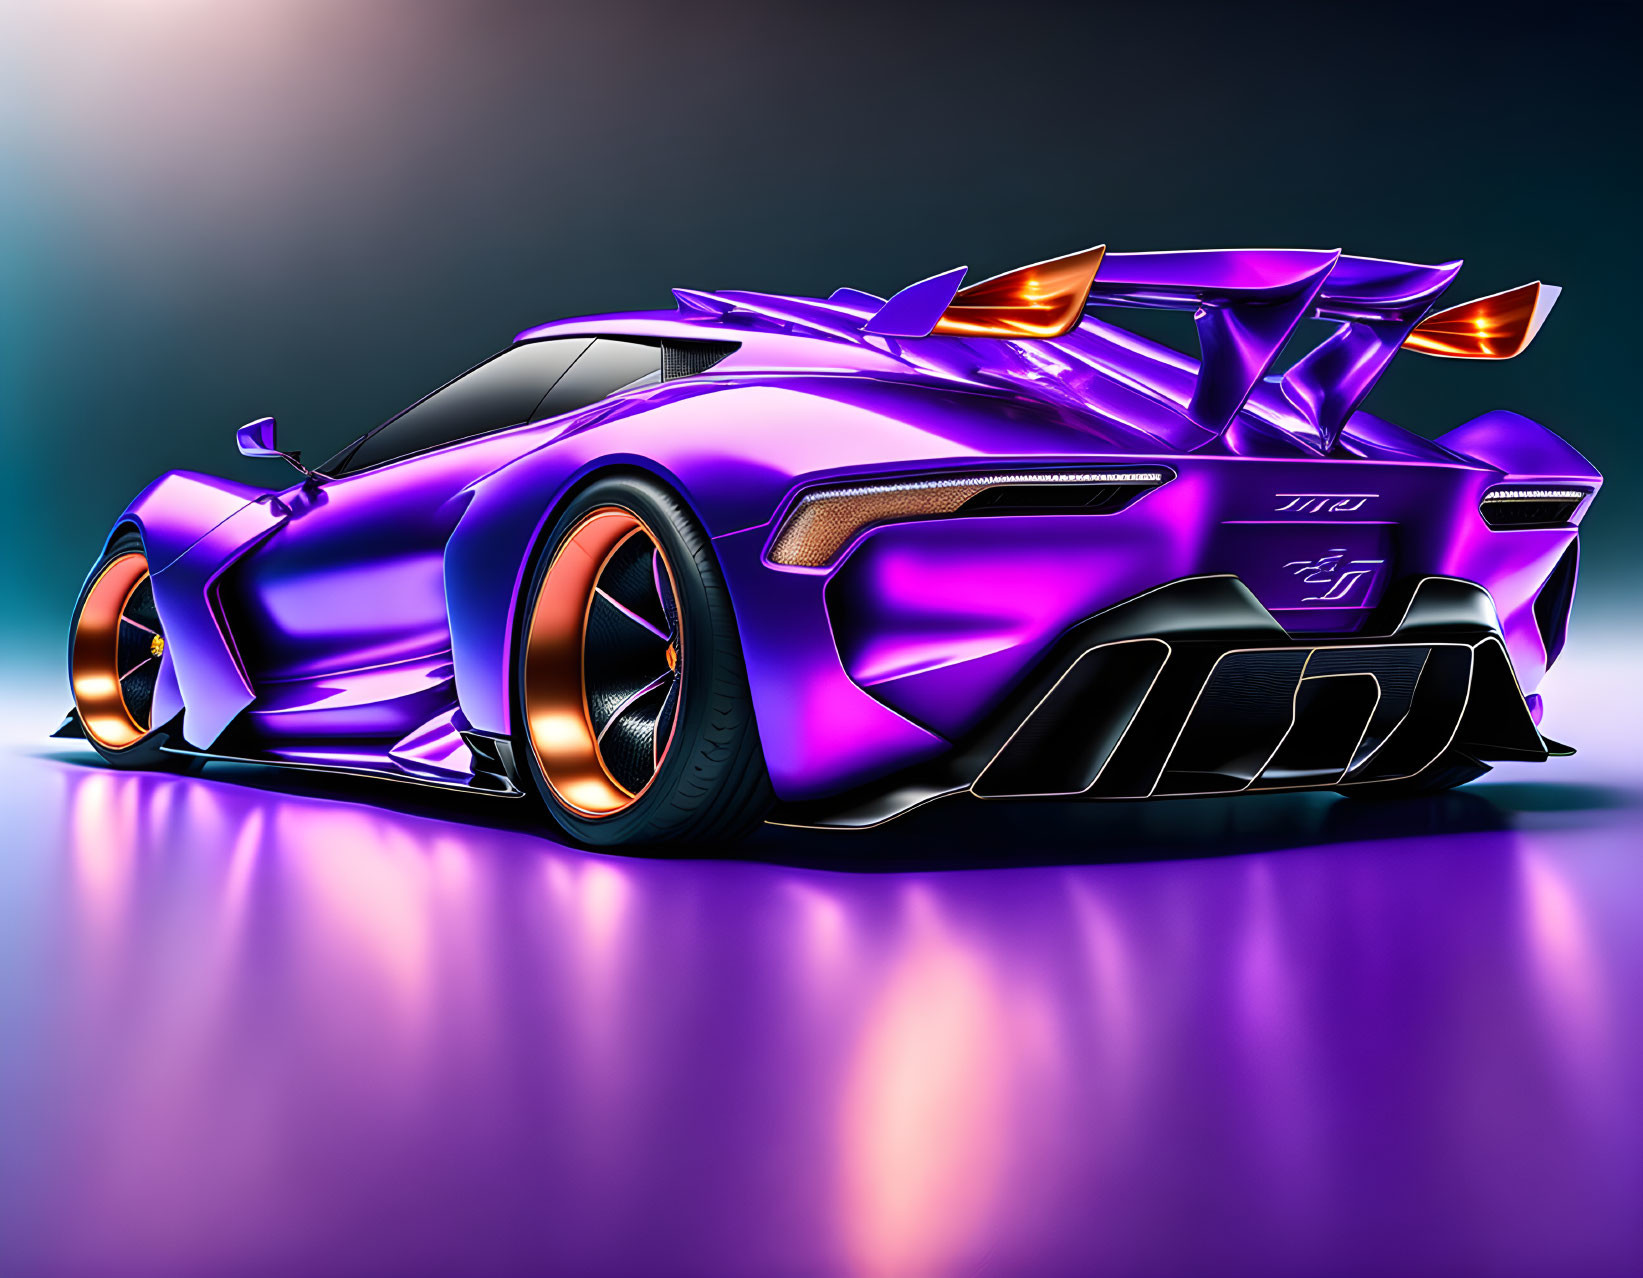 Shiny purple diamond future sports car